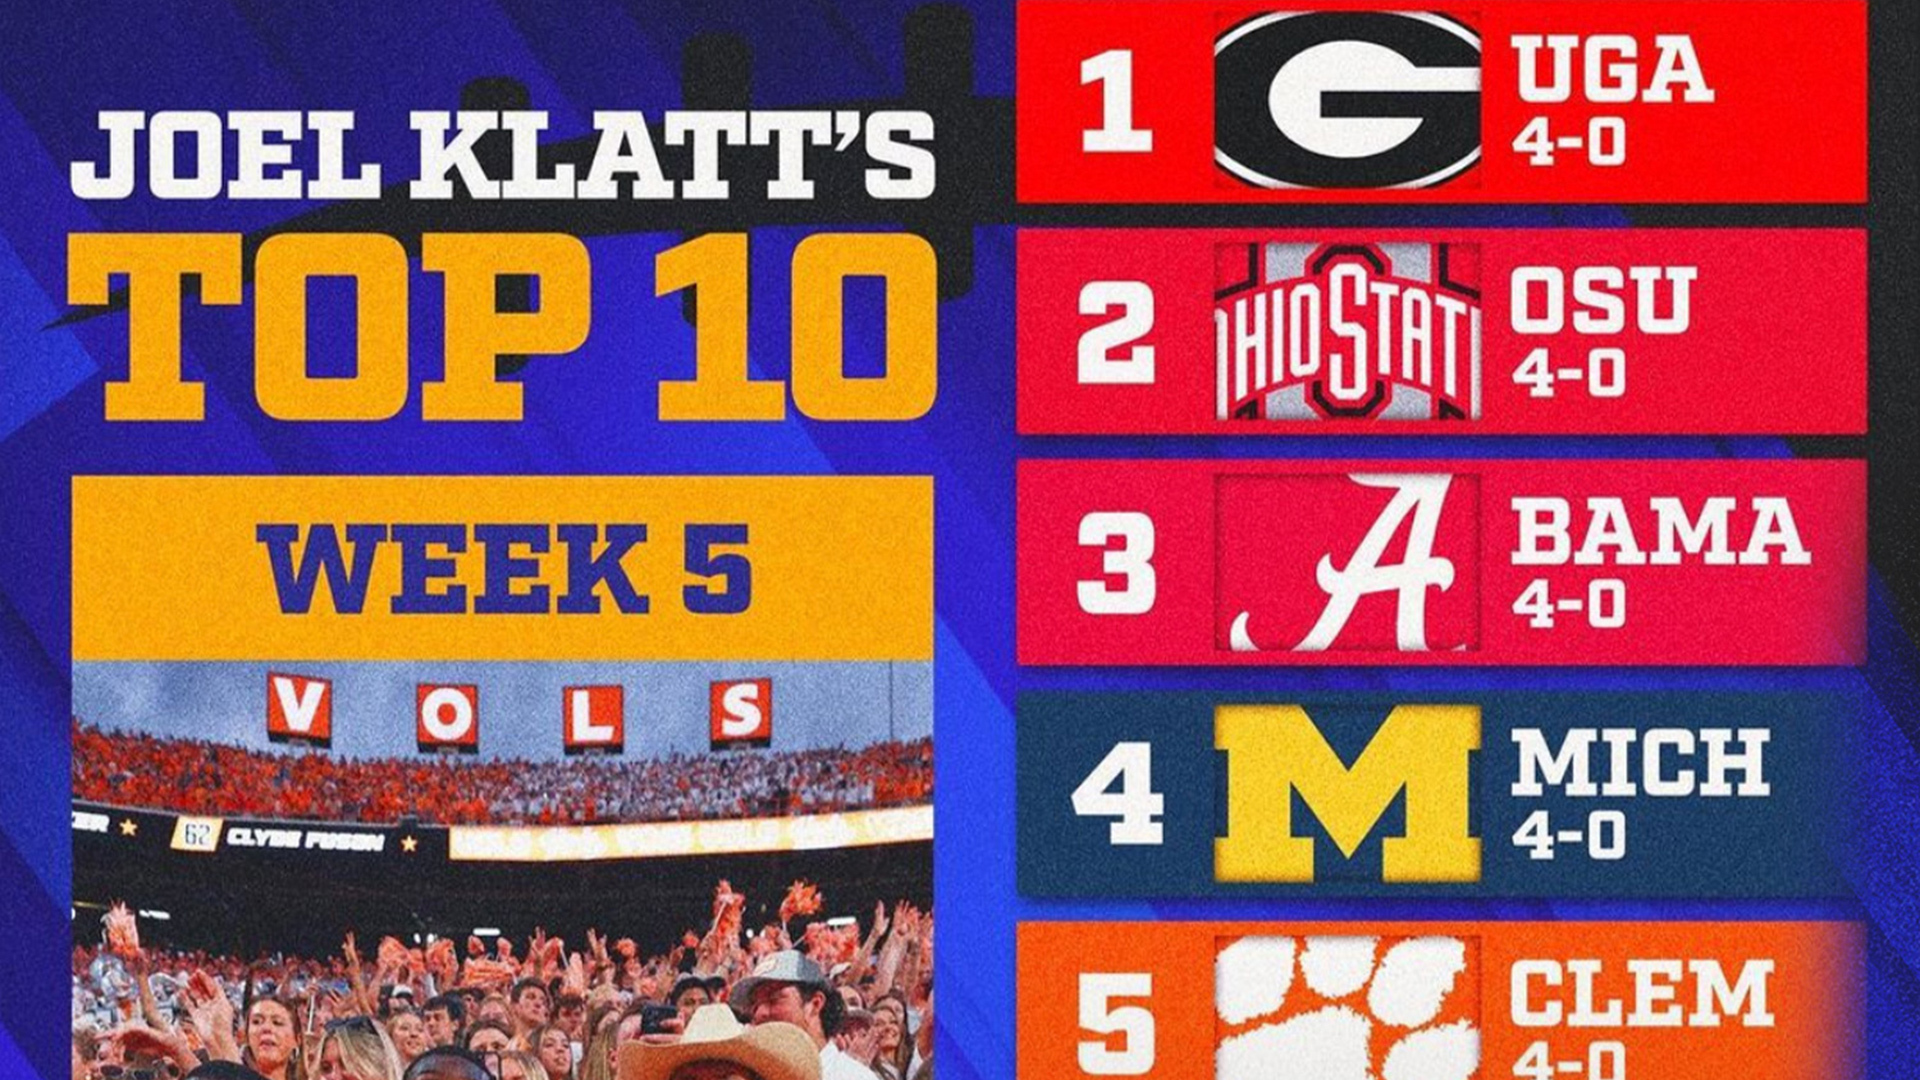 Kentucky, Tennessee debut in Joel Klatt's latest top 10 rankings